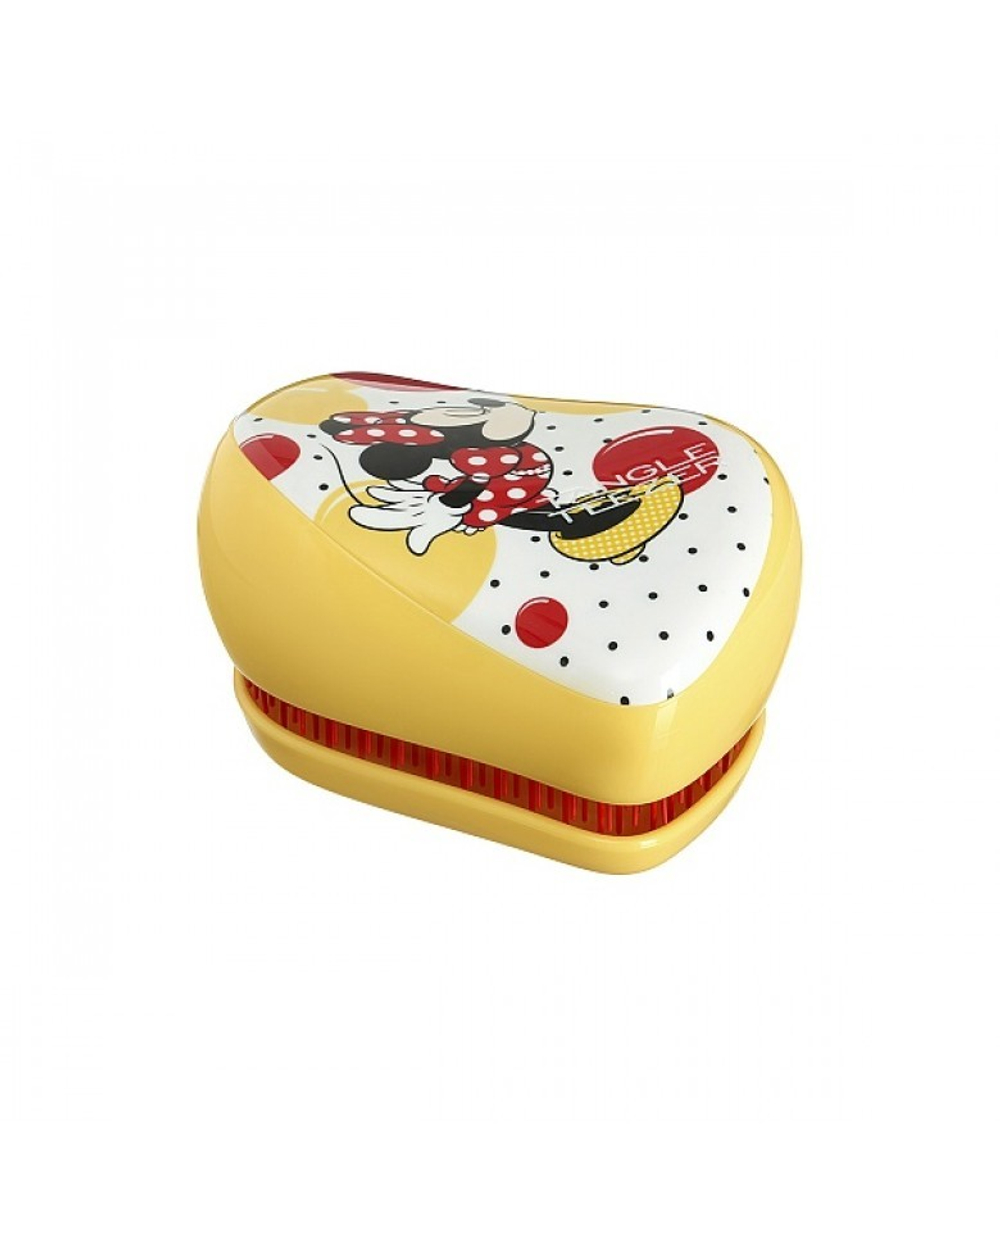 Расческа Tangle Teezer Compact Styler Minnie Mouse Sunshine Yellow